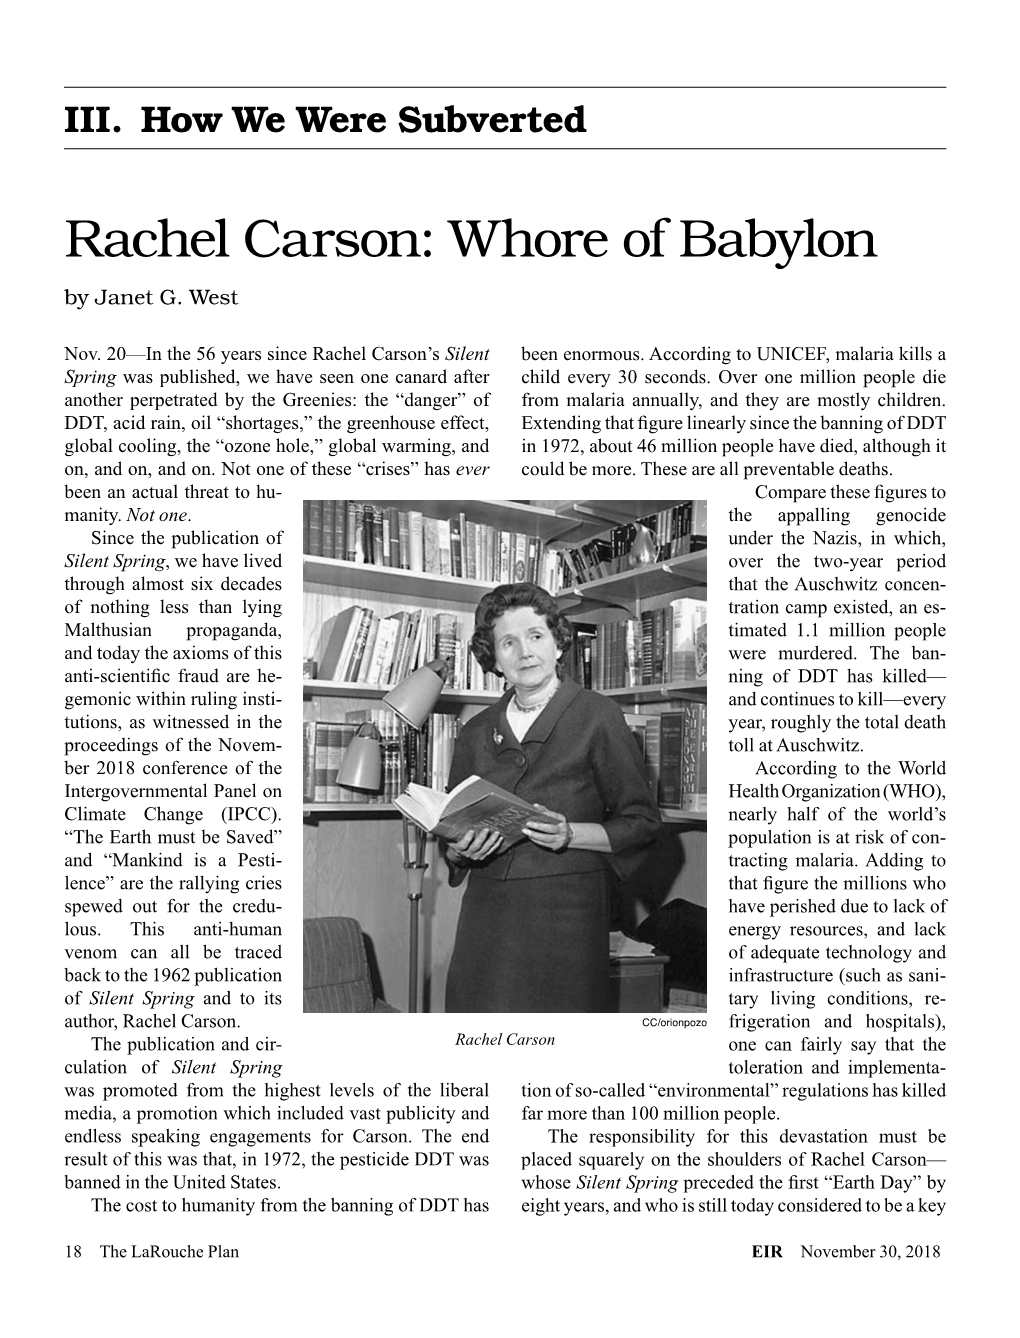 Rachel Carson: Whore of Babylon by Janet G